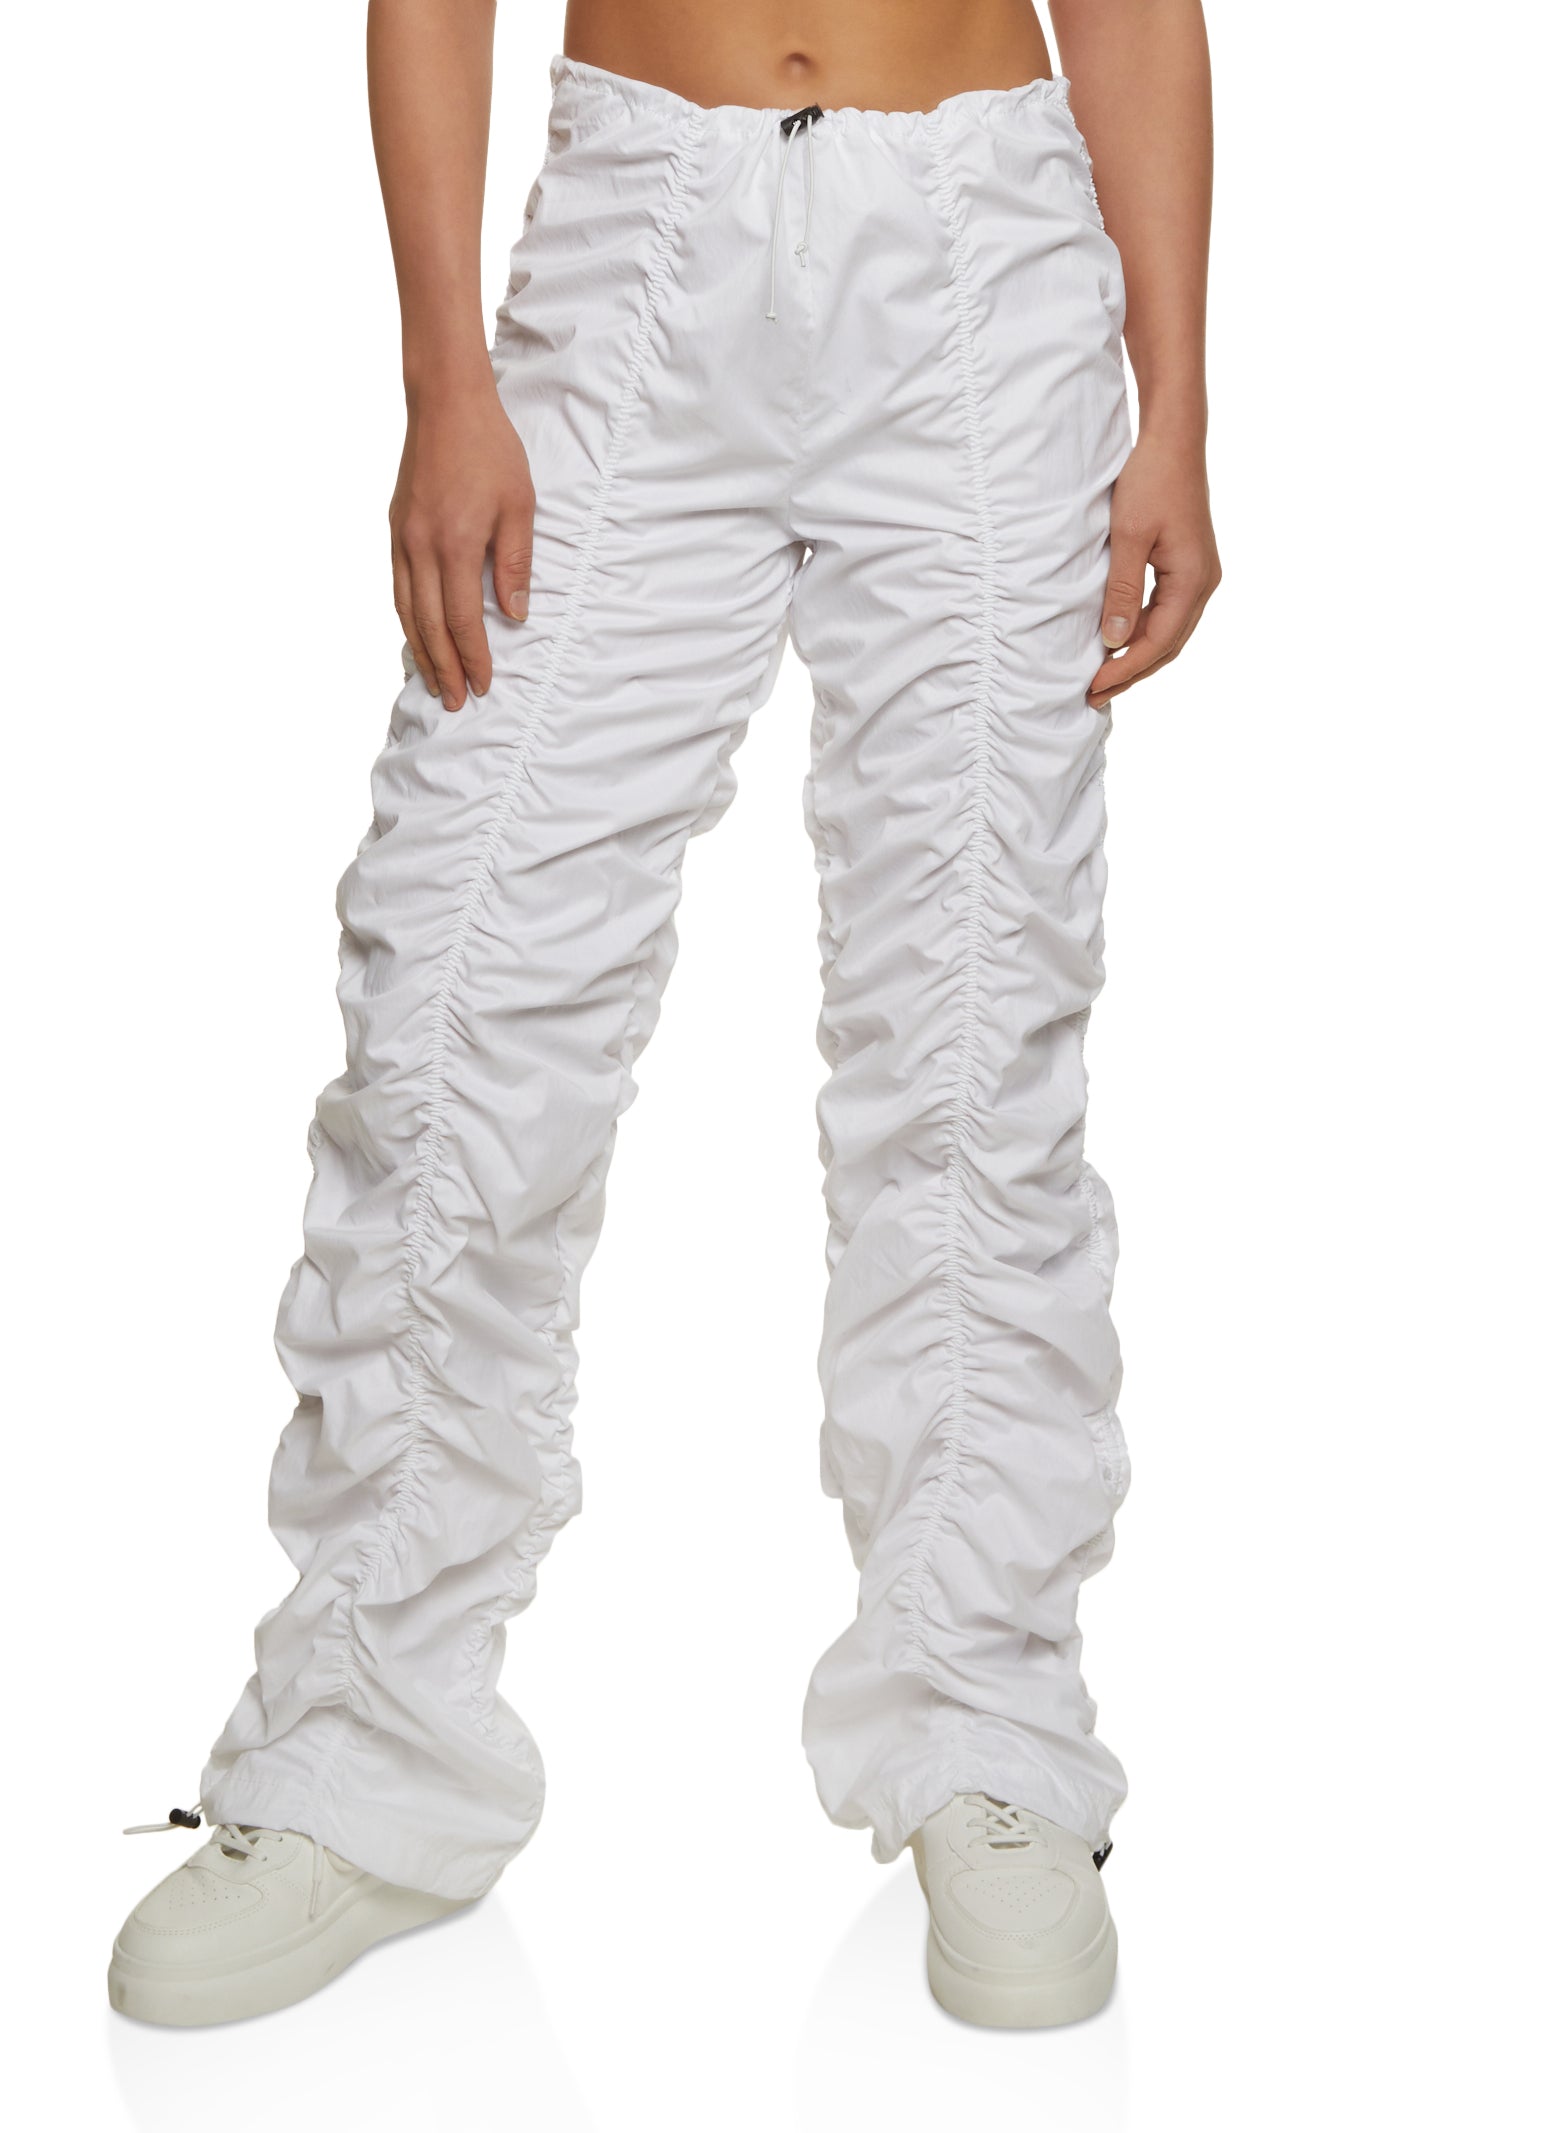 Women's White Cargo Parachute Pants Out Pocket